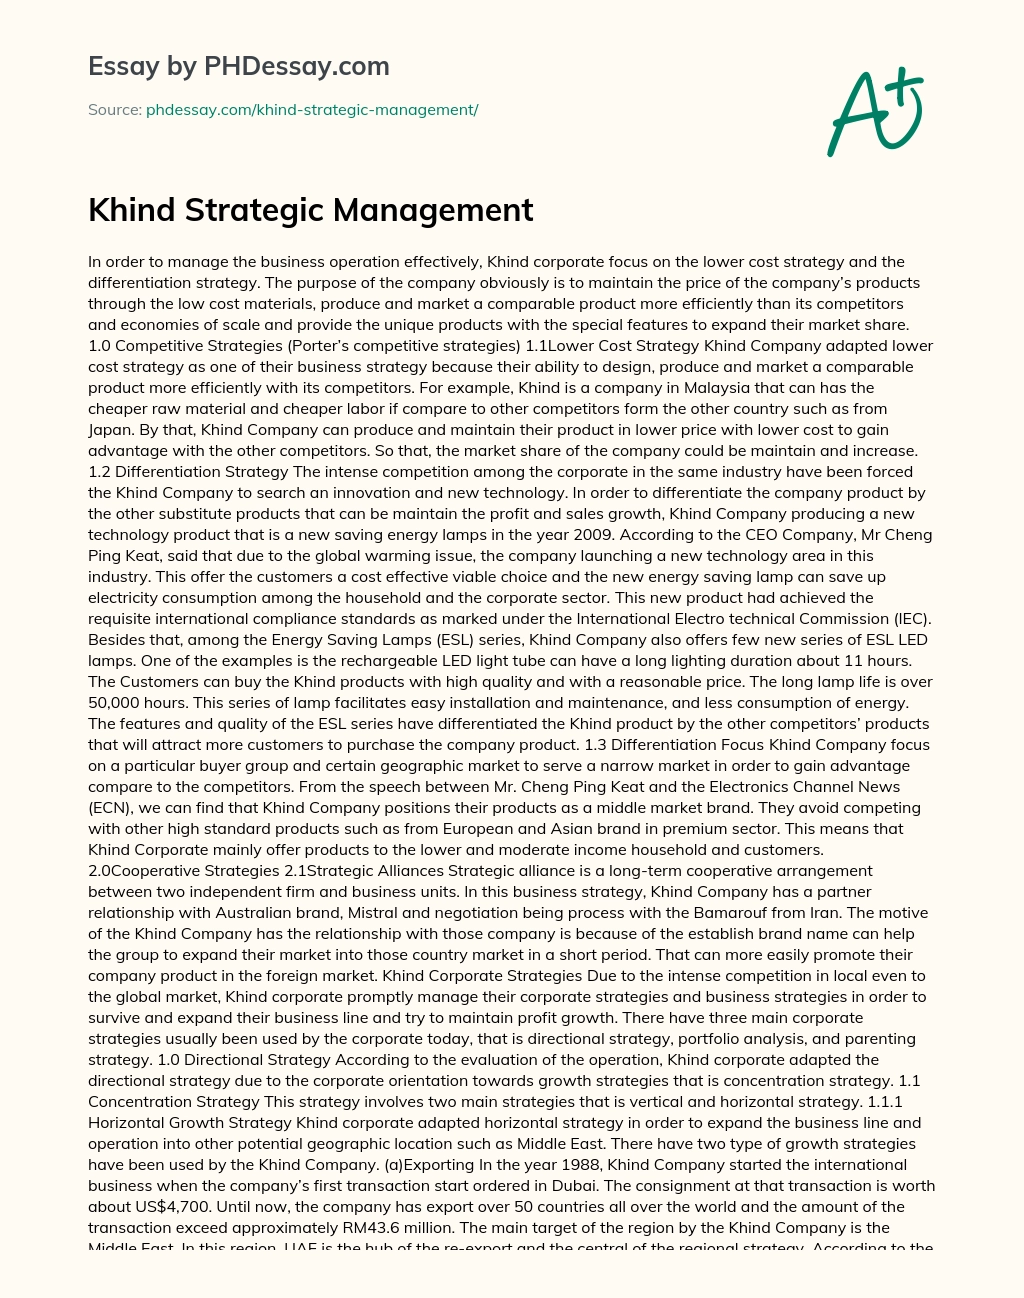 Khind Strategic Management essay